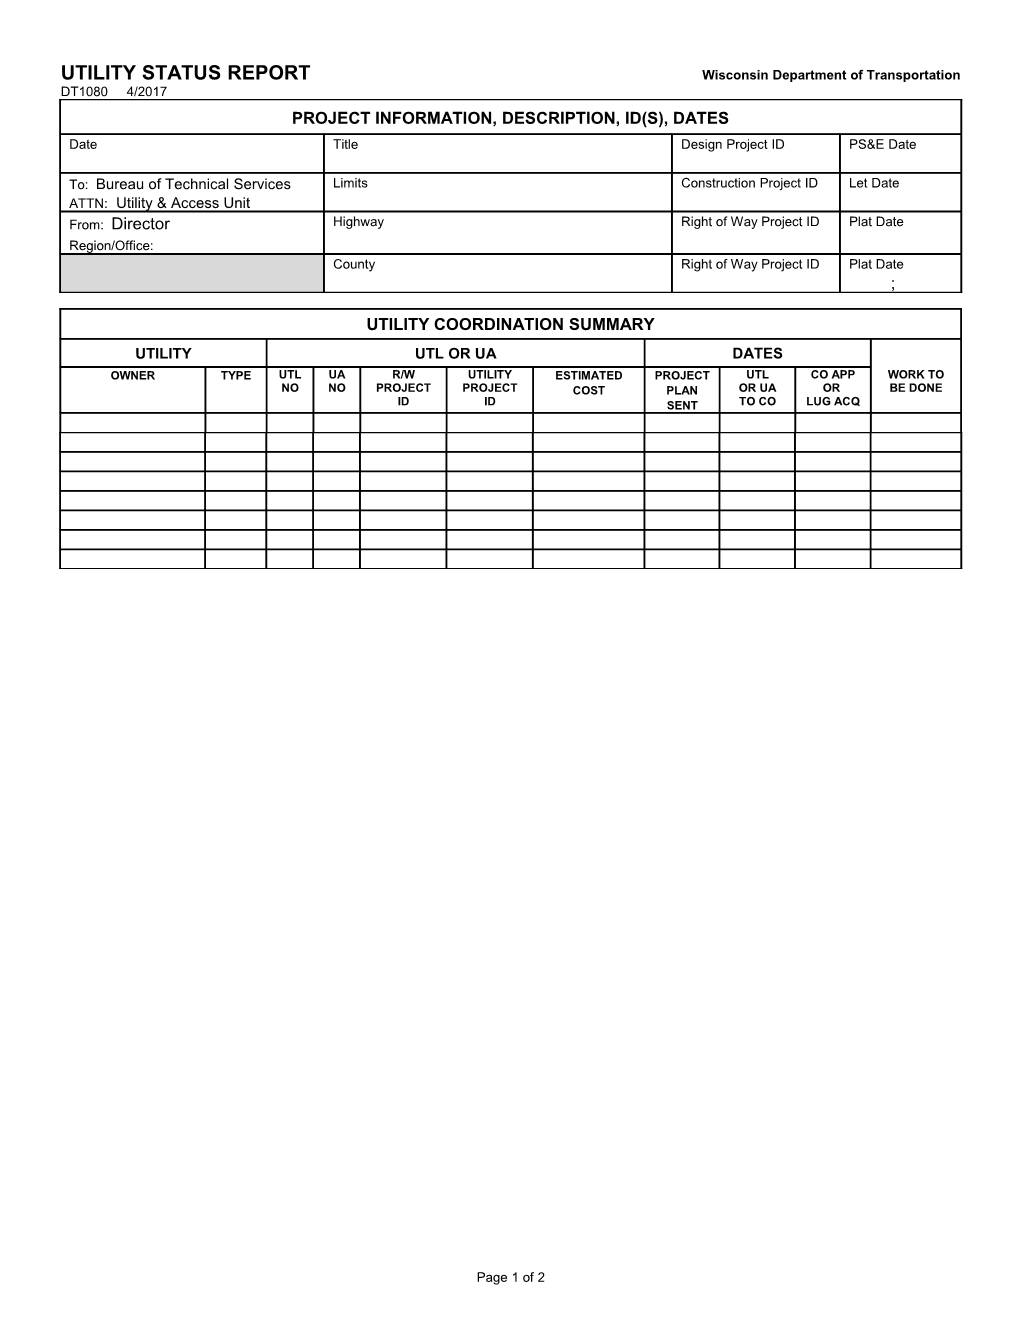 DT1080 Utility Status Report